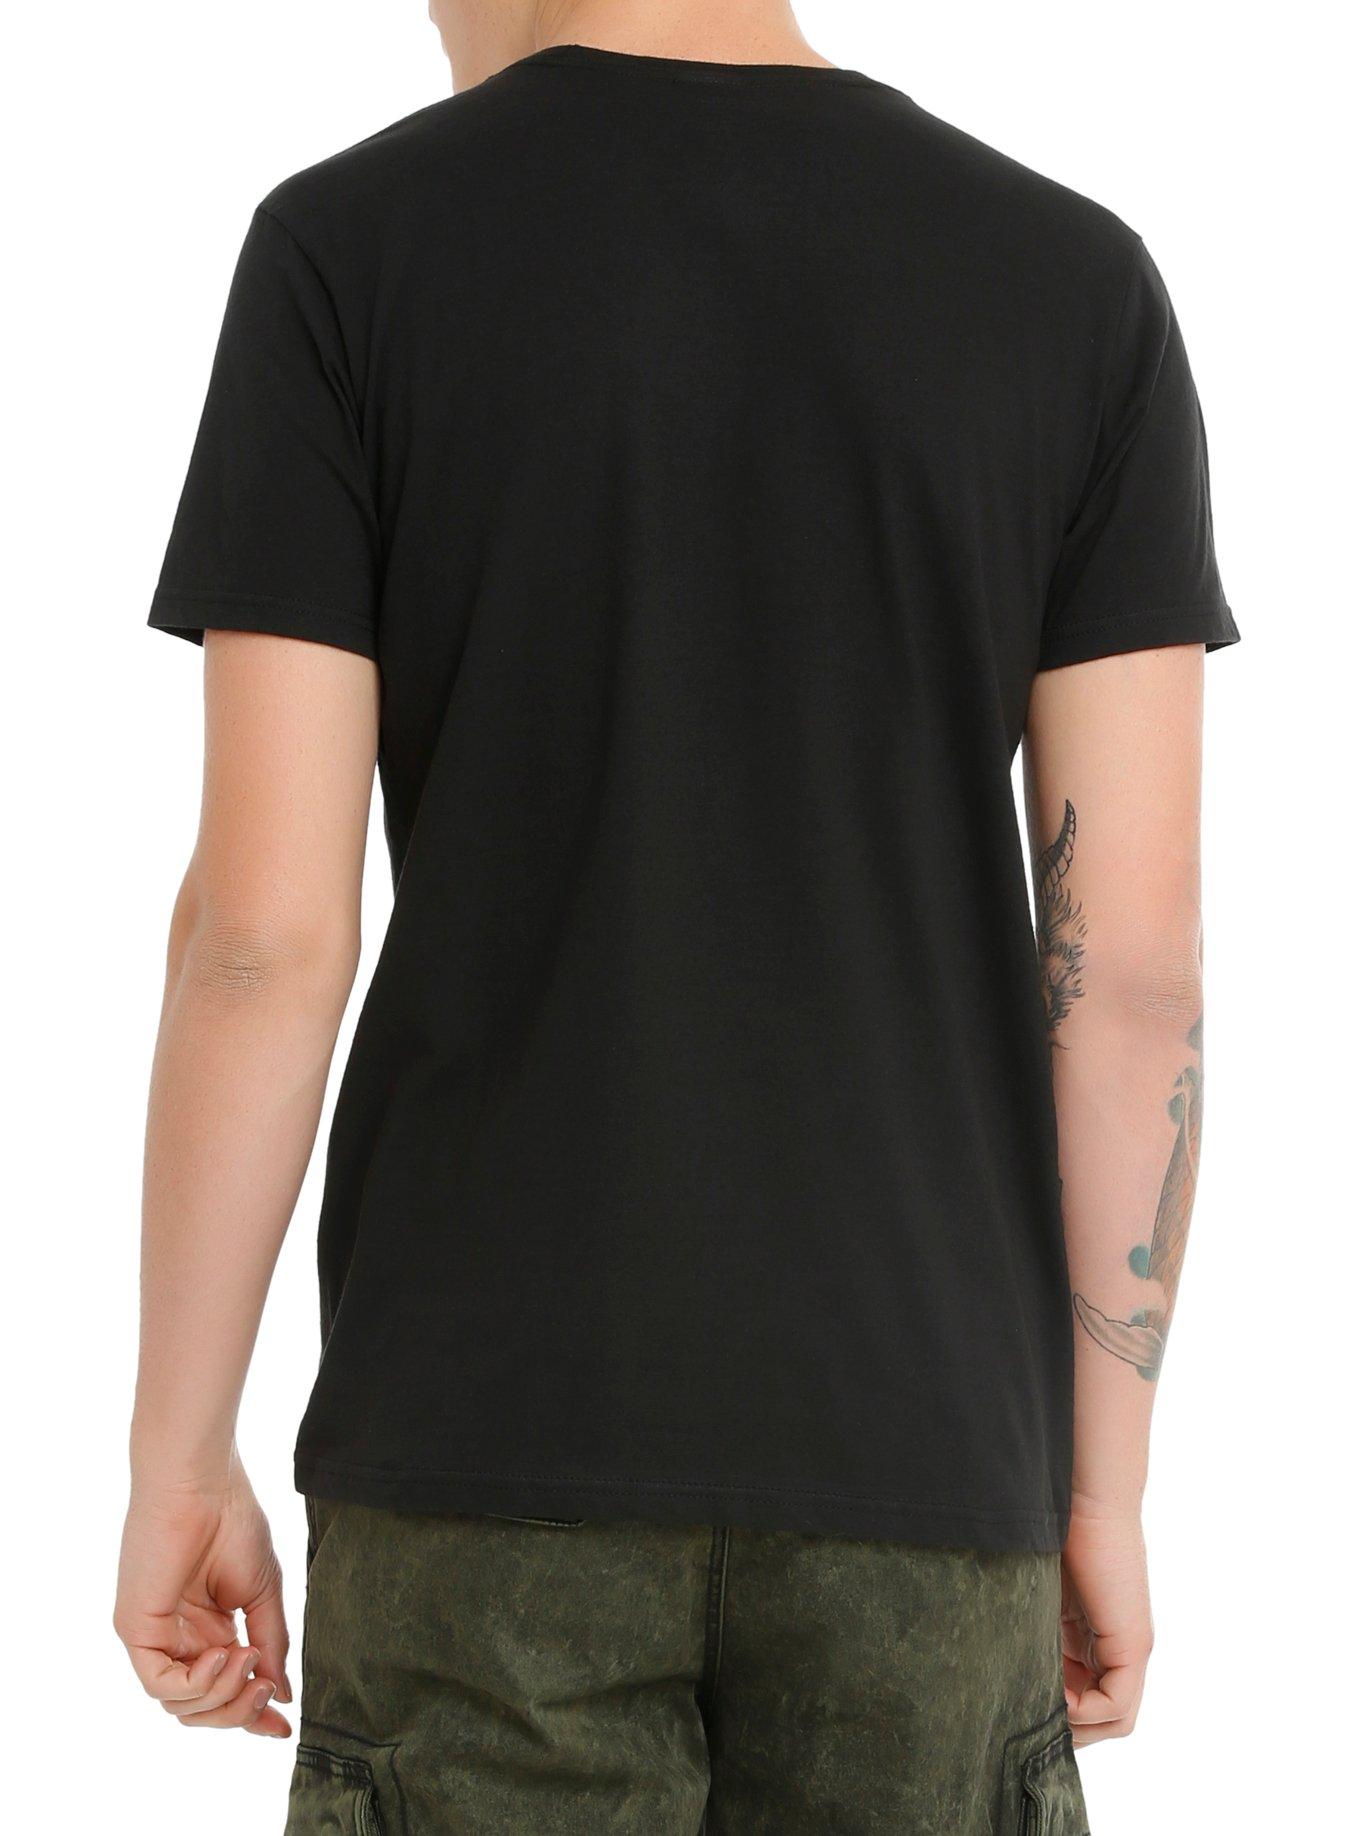 Killswitch Engage Disarm The Descent T-Shirt, BLACK, alternate